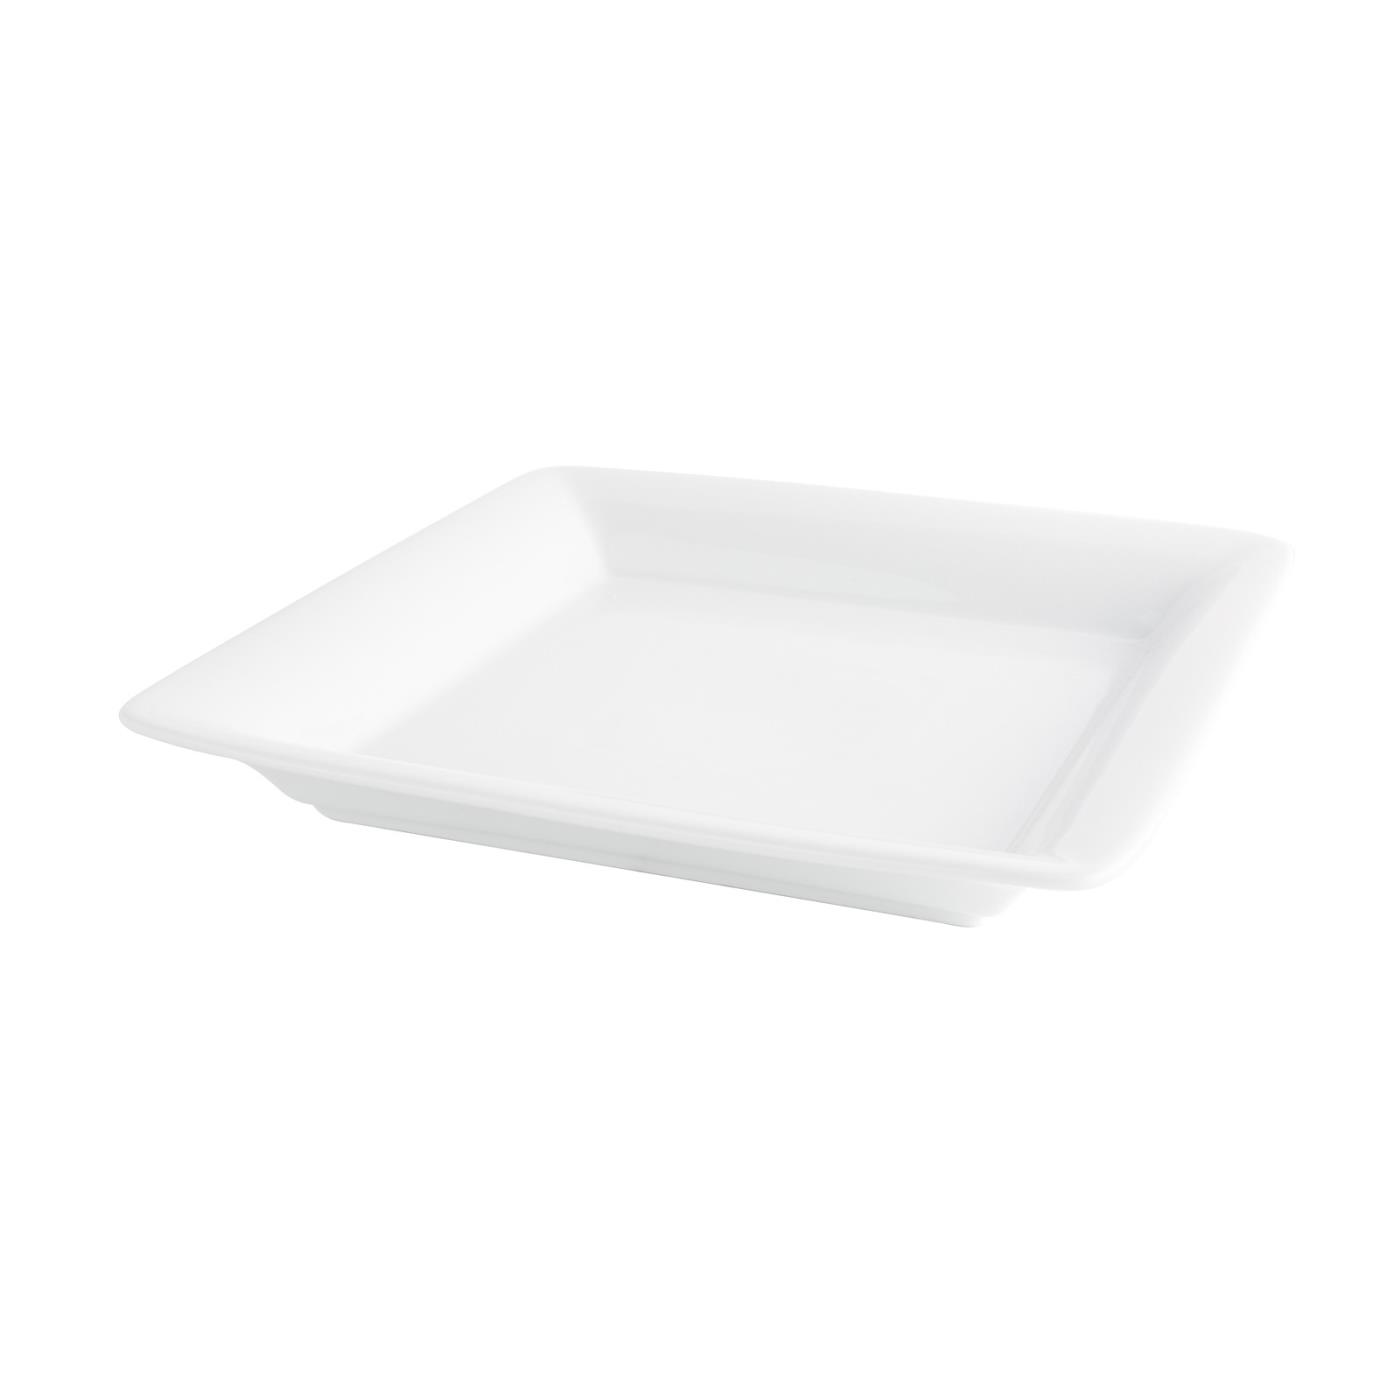 White Ceramic Square Platter - 14"